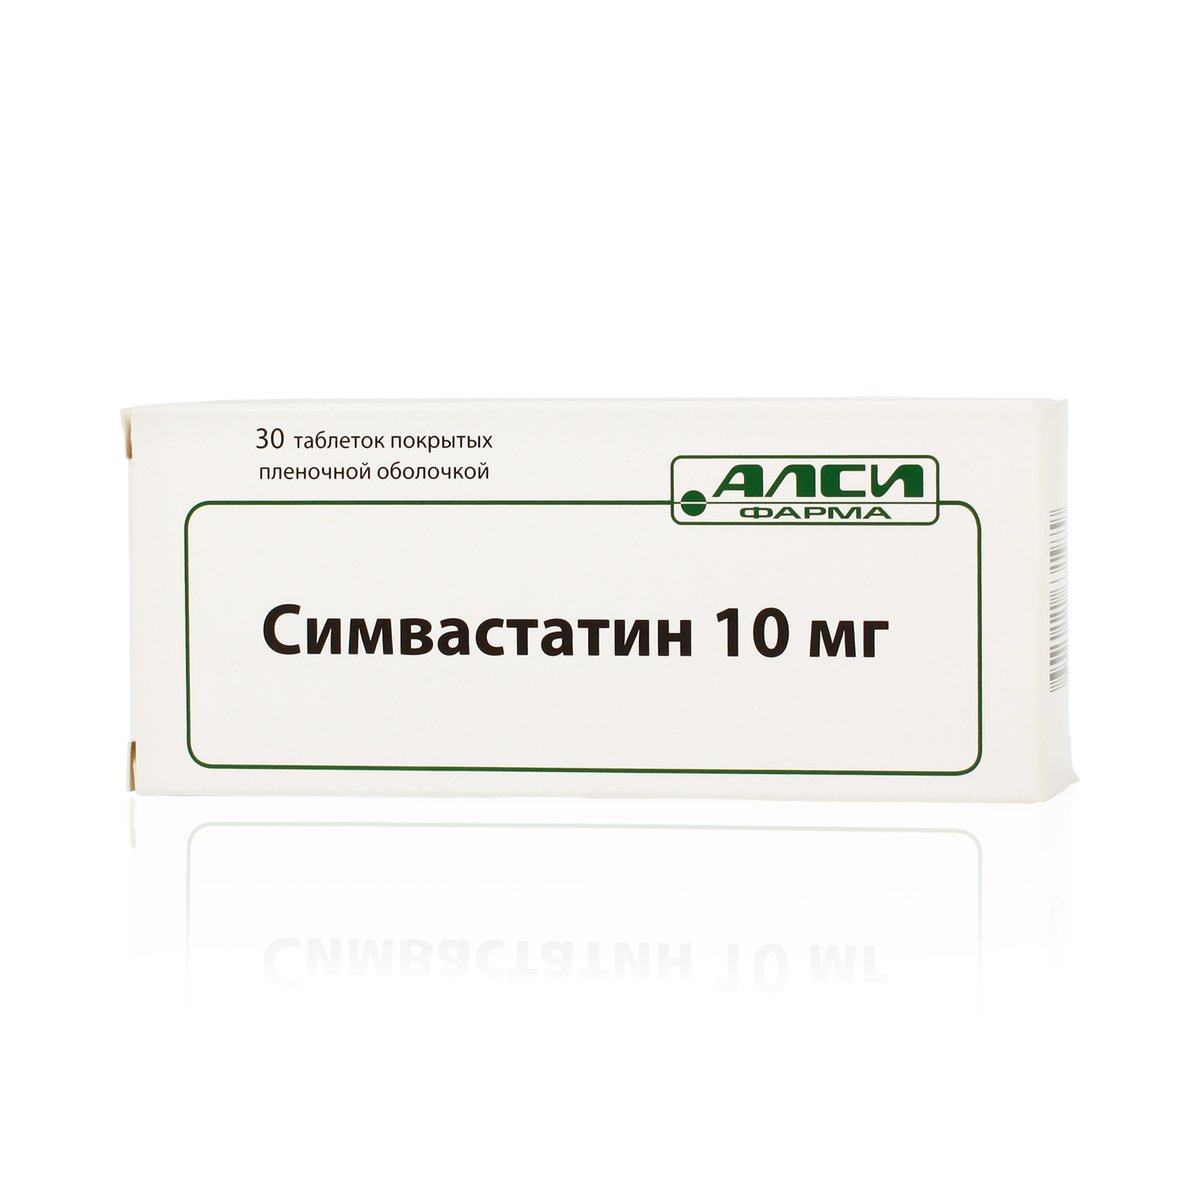 Симвастатин (таблетки, 30 шт, 10 мг, для приема внутрь) - цена,  .